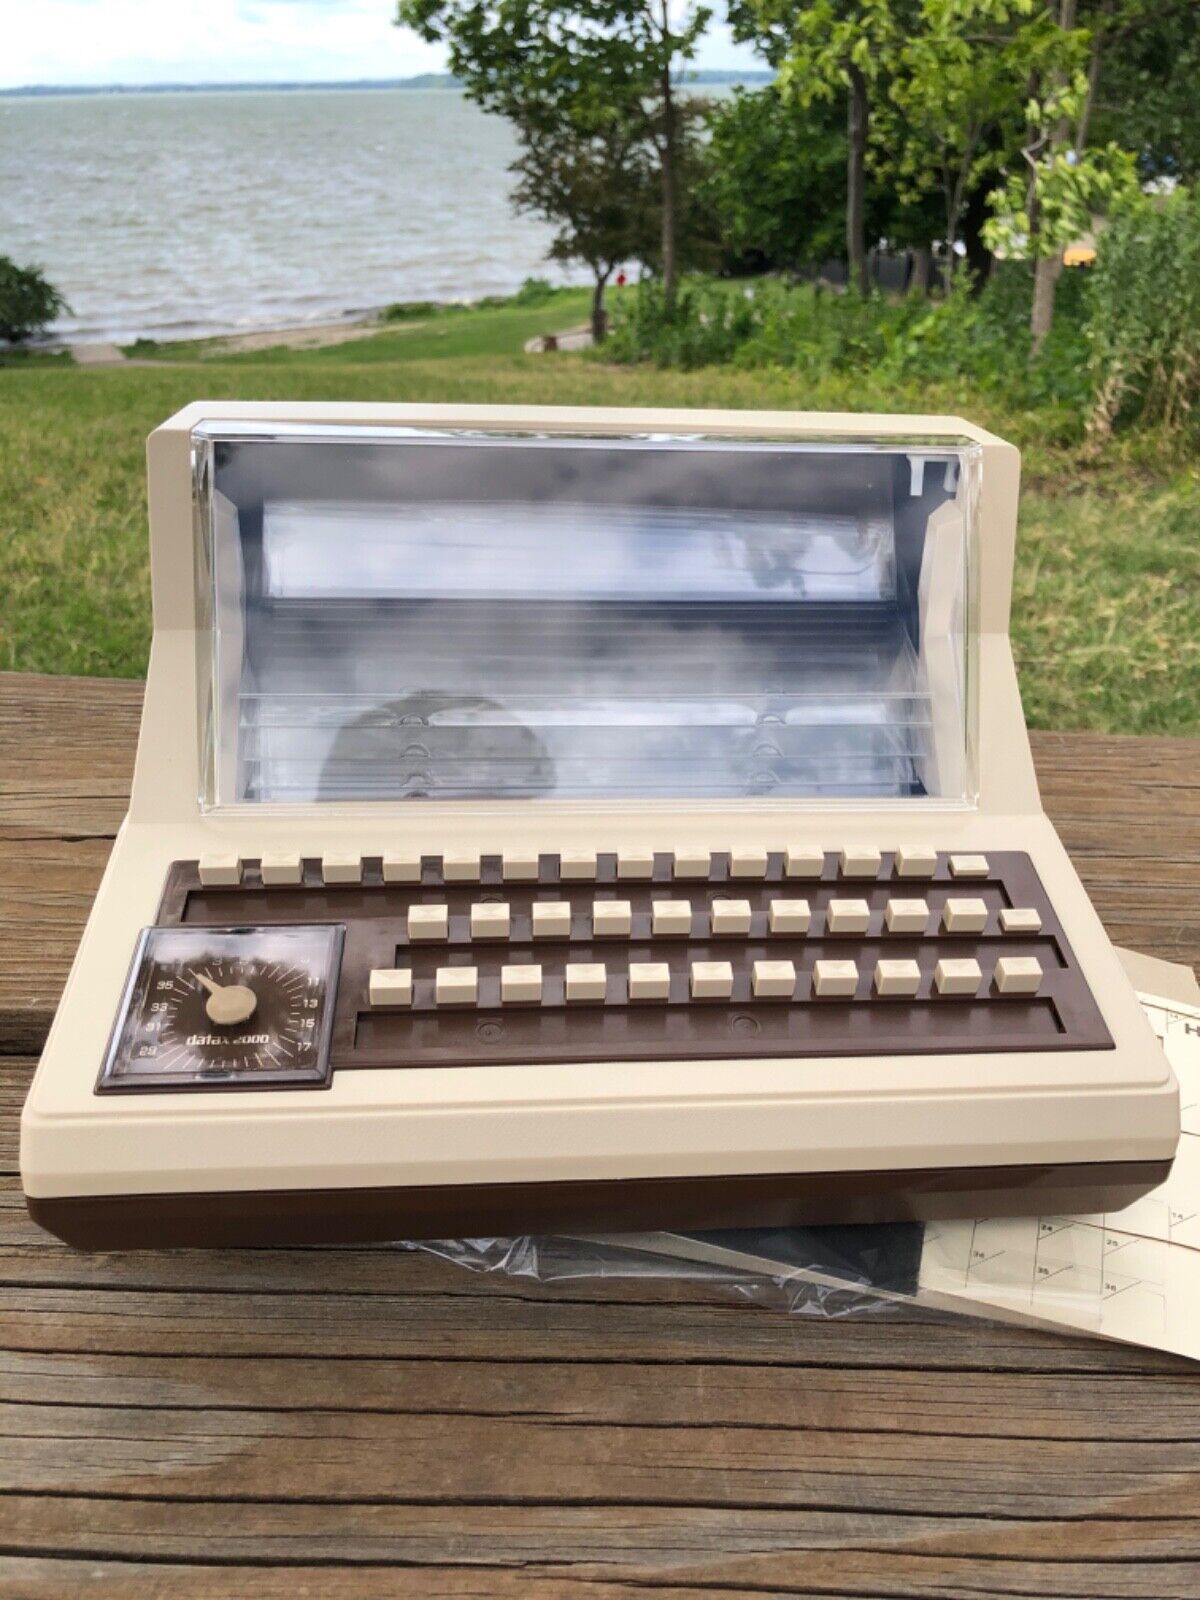 New Vintage Typewriter Data Storage Contact Datax 2000 Model 770 Made in Japan